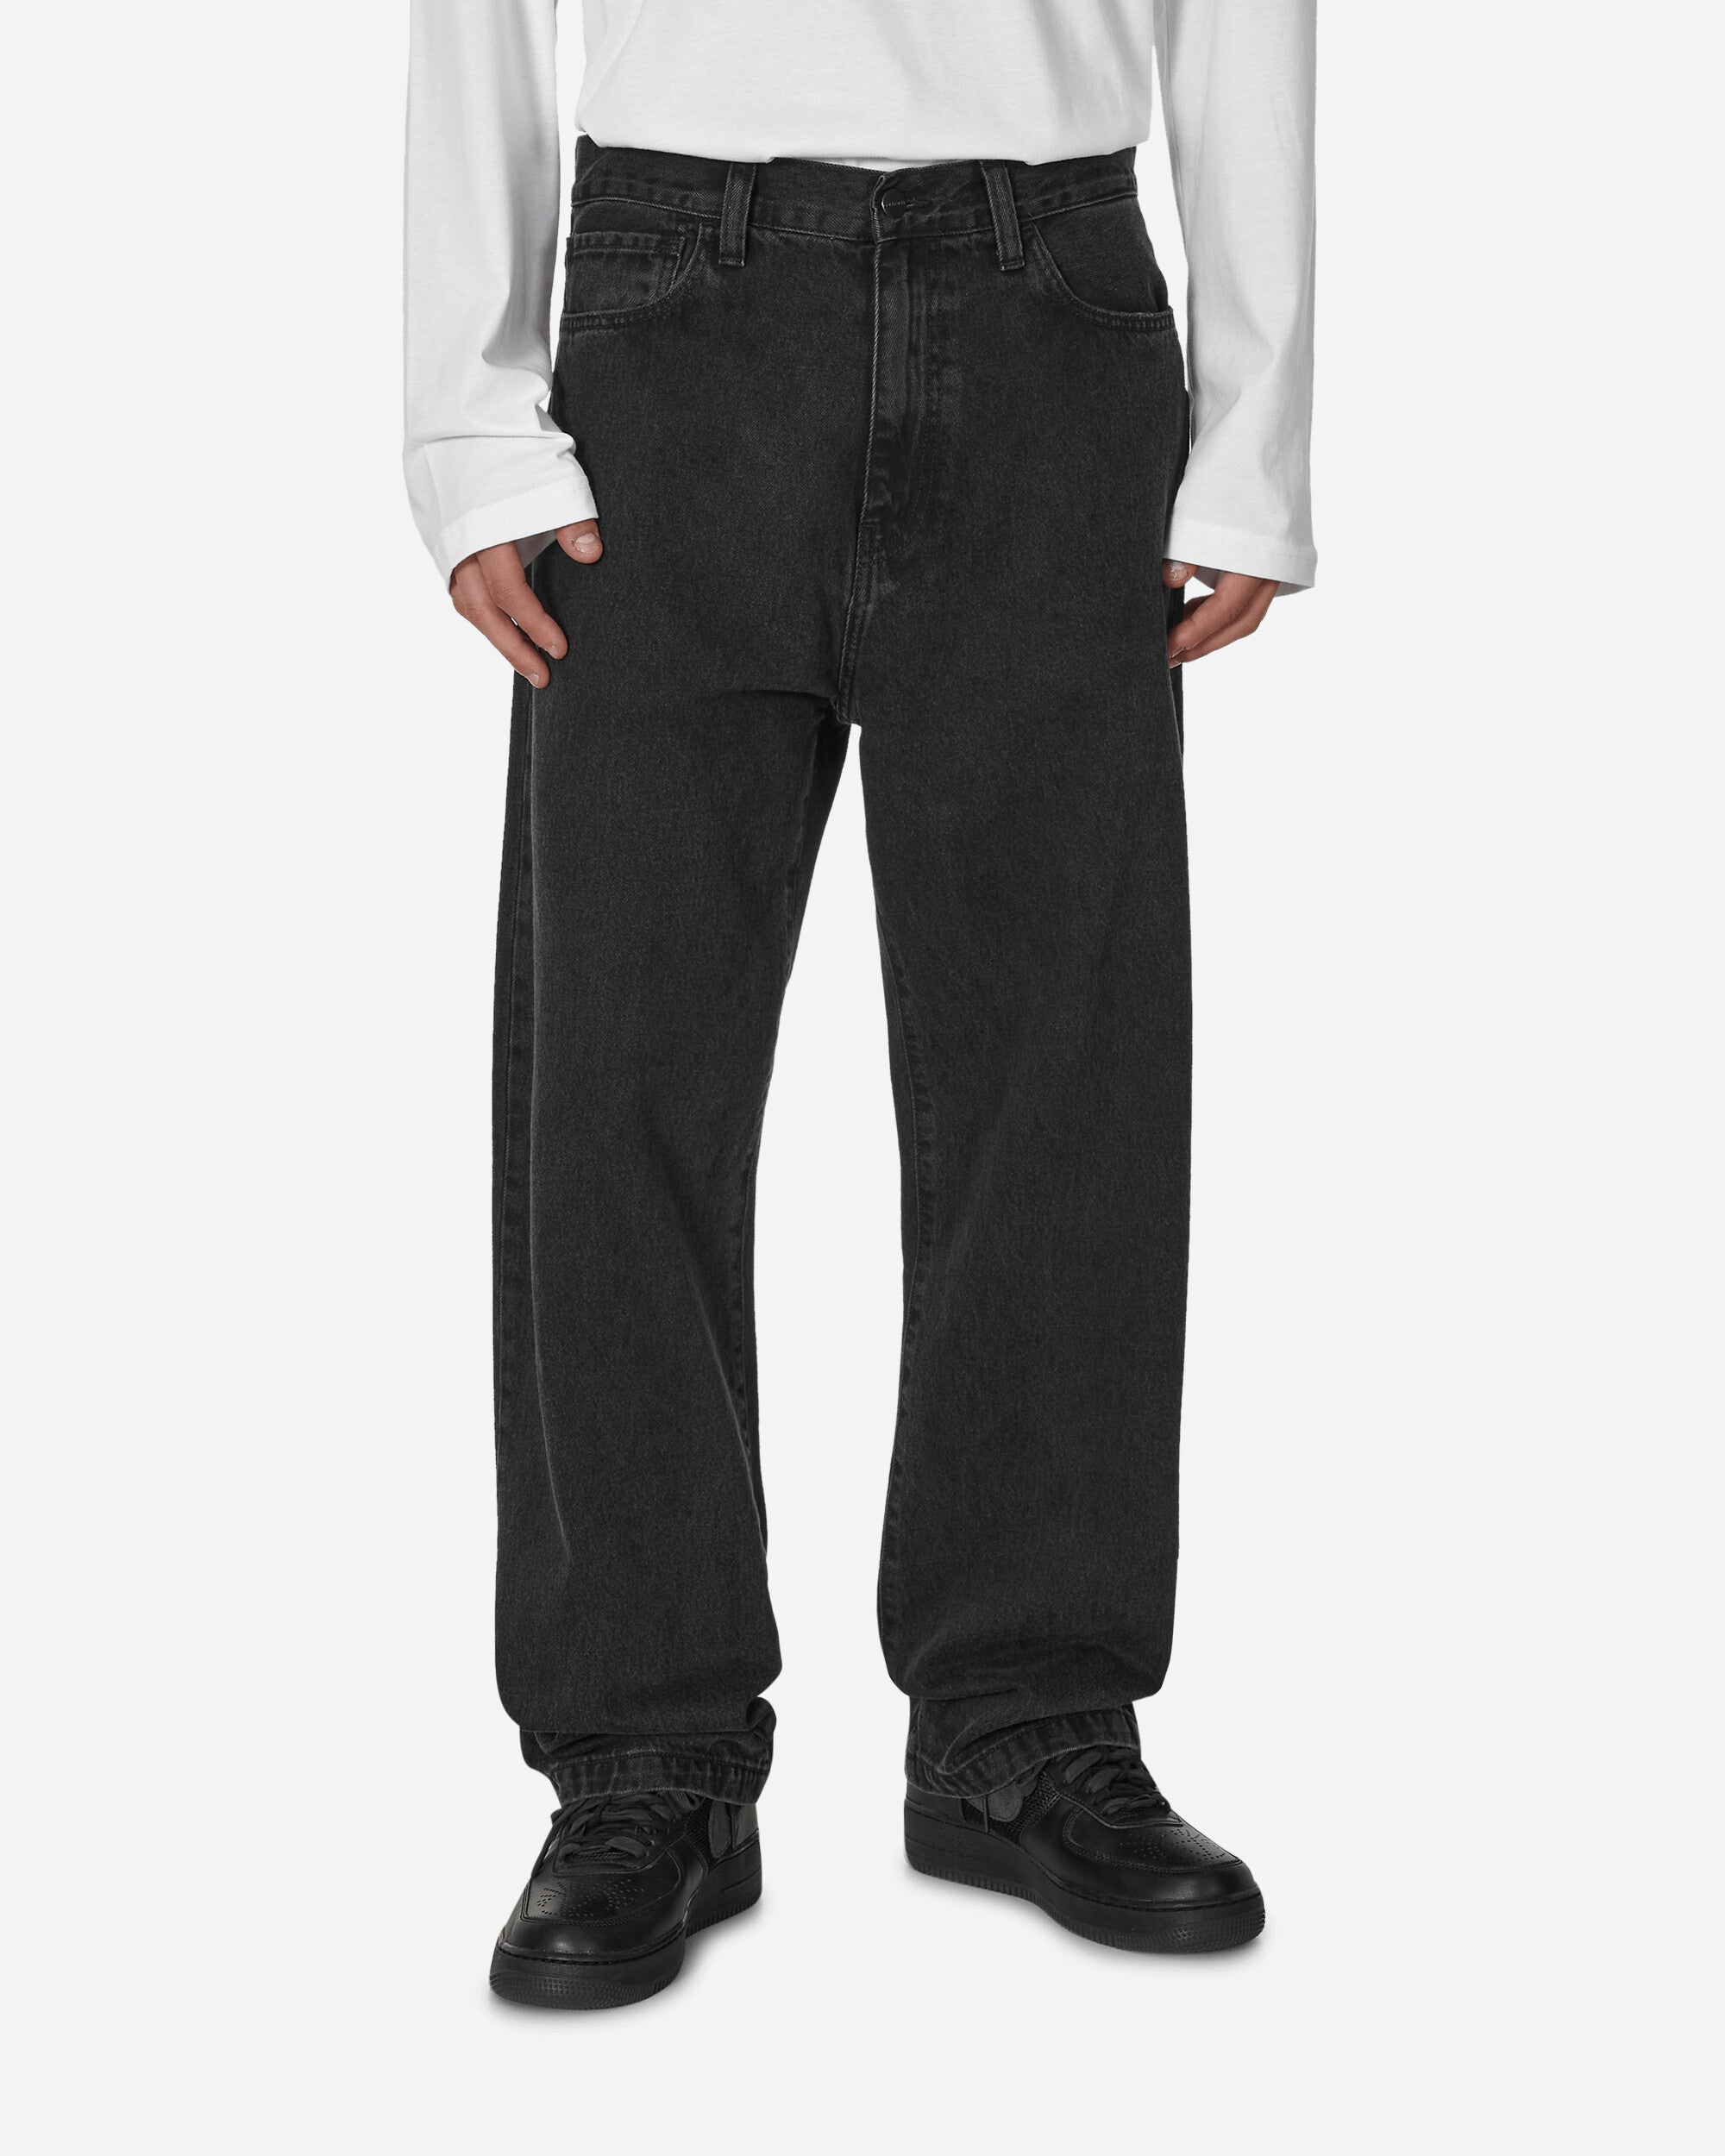 Carhartt WIP Landon Pant Black Pants Trousers I030468 8906